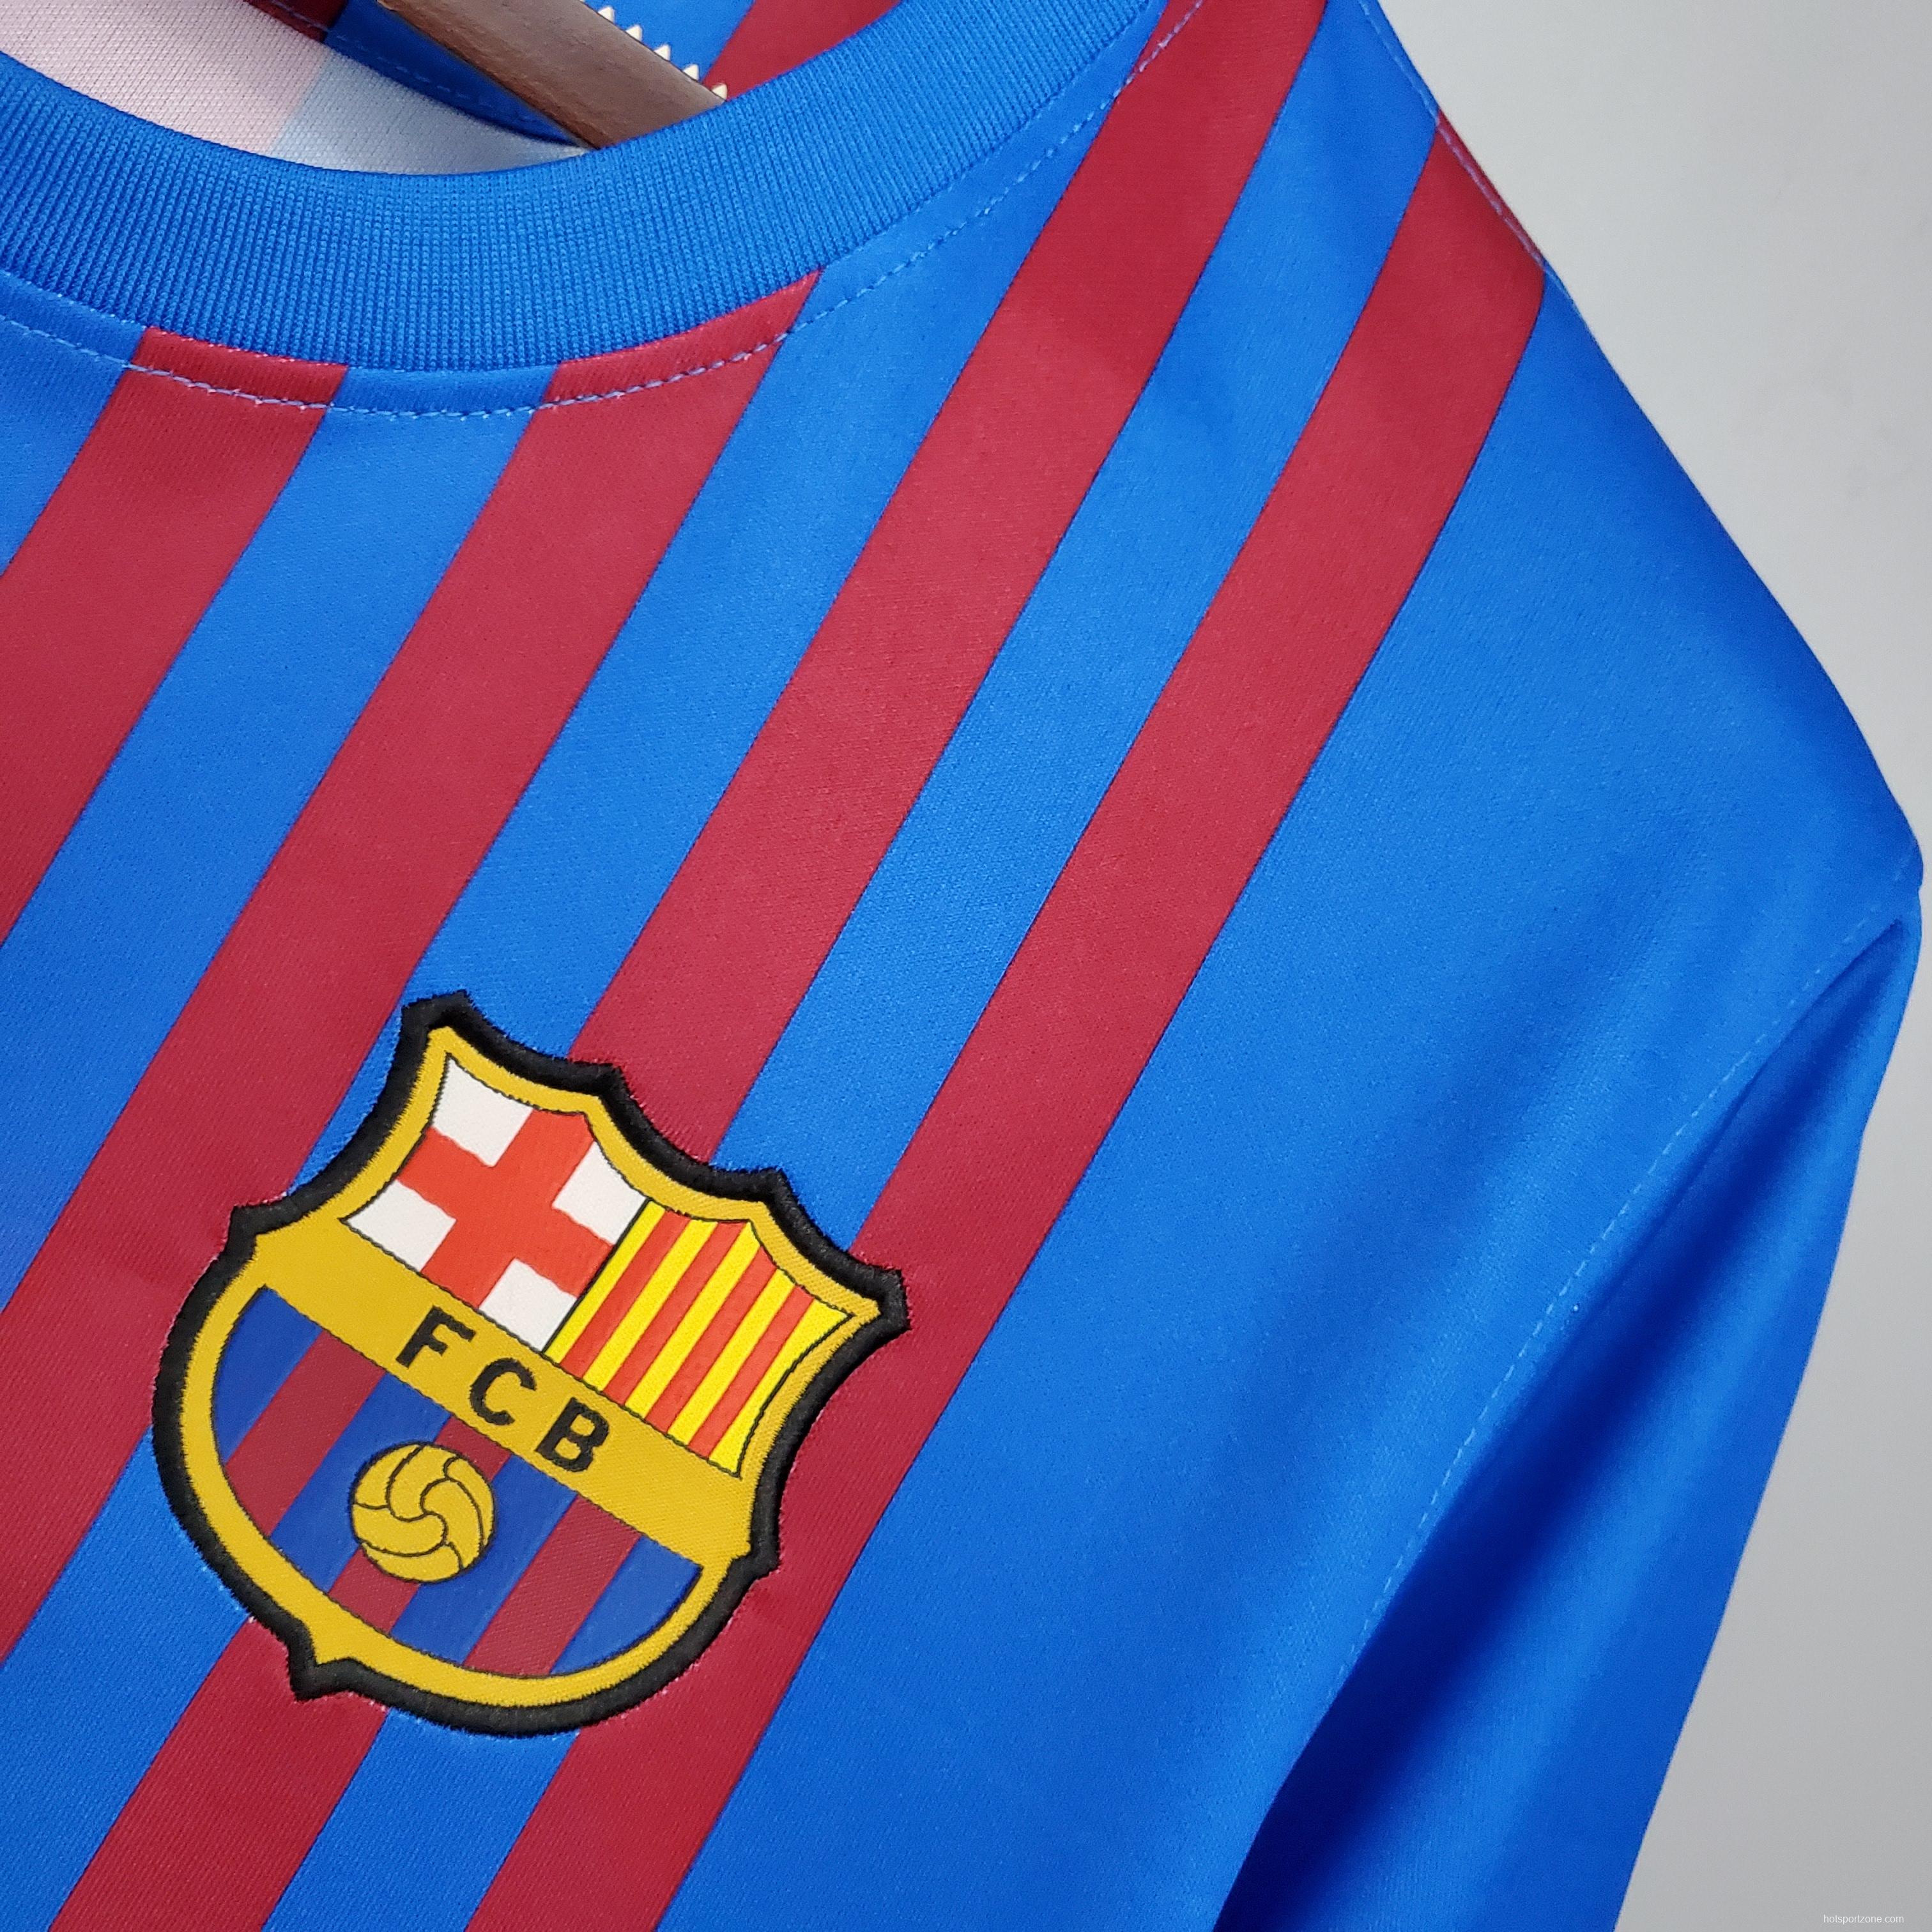 21/22 Barcelona home Soccer Jersey